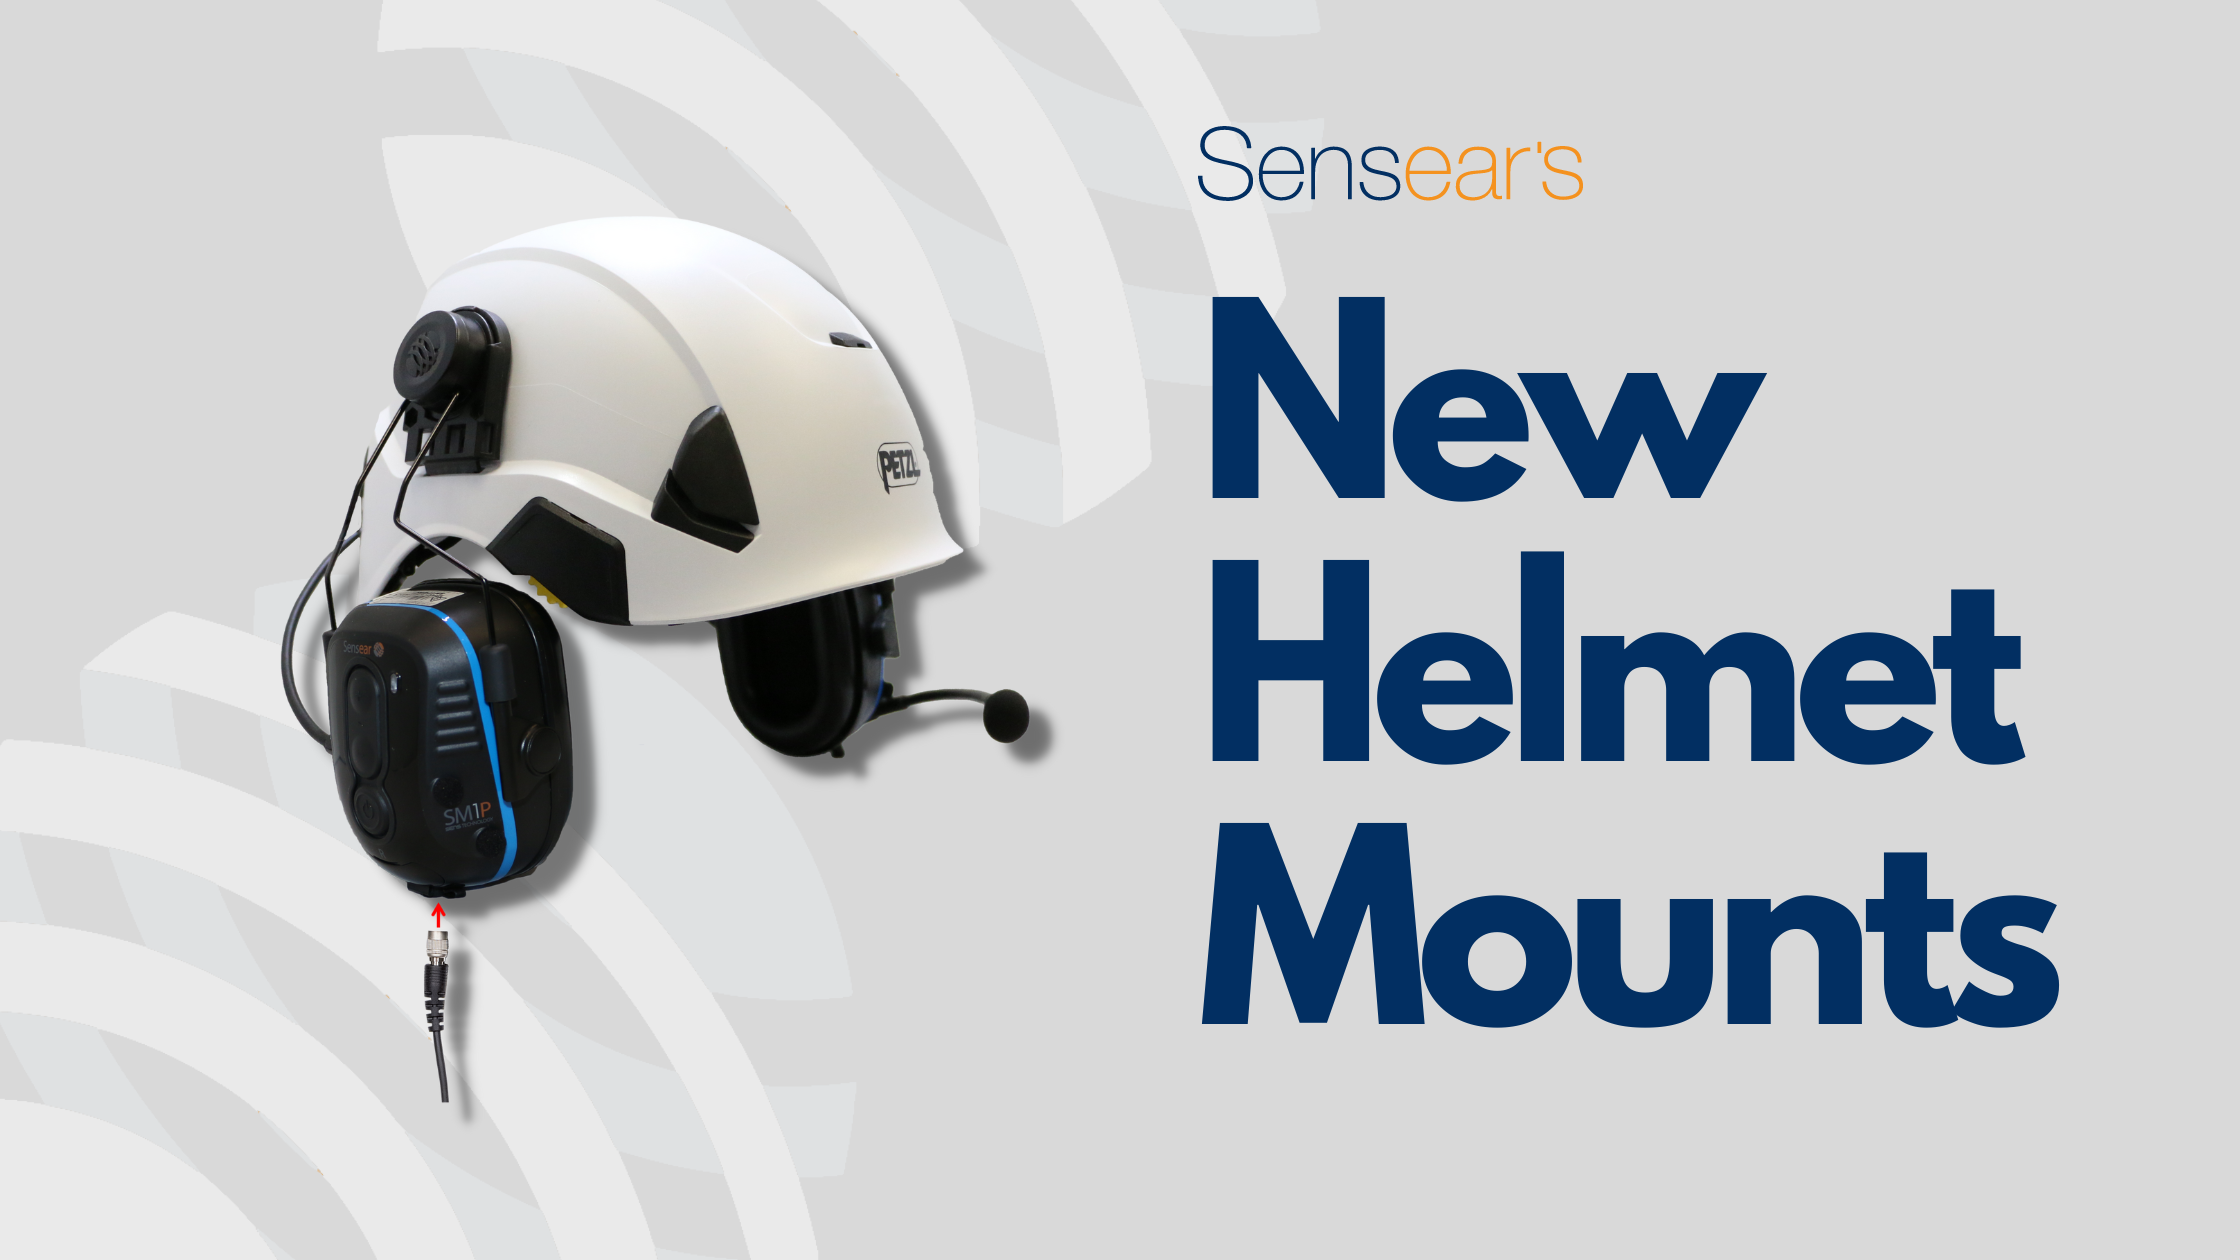 Sensear's New Helmet Mounts